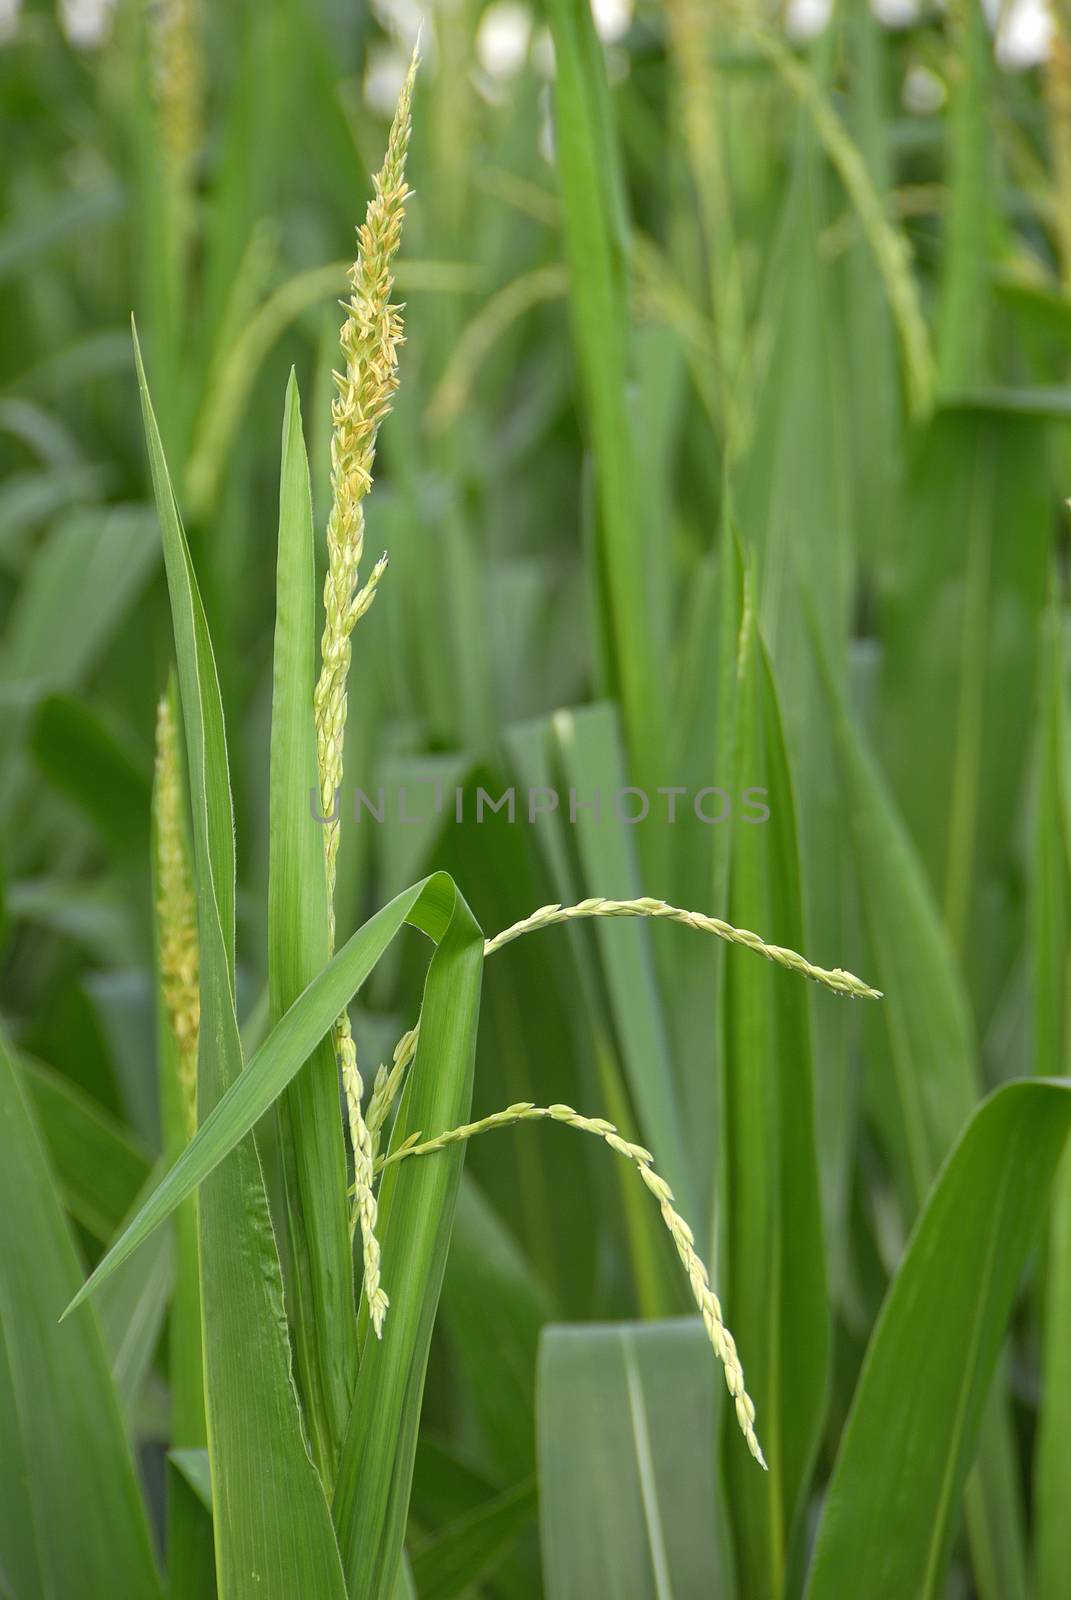 Zea mays, Corn, Allergens Plants by jalonsohu@gmail.com